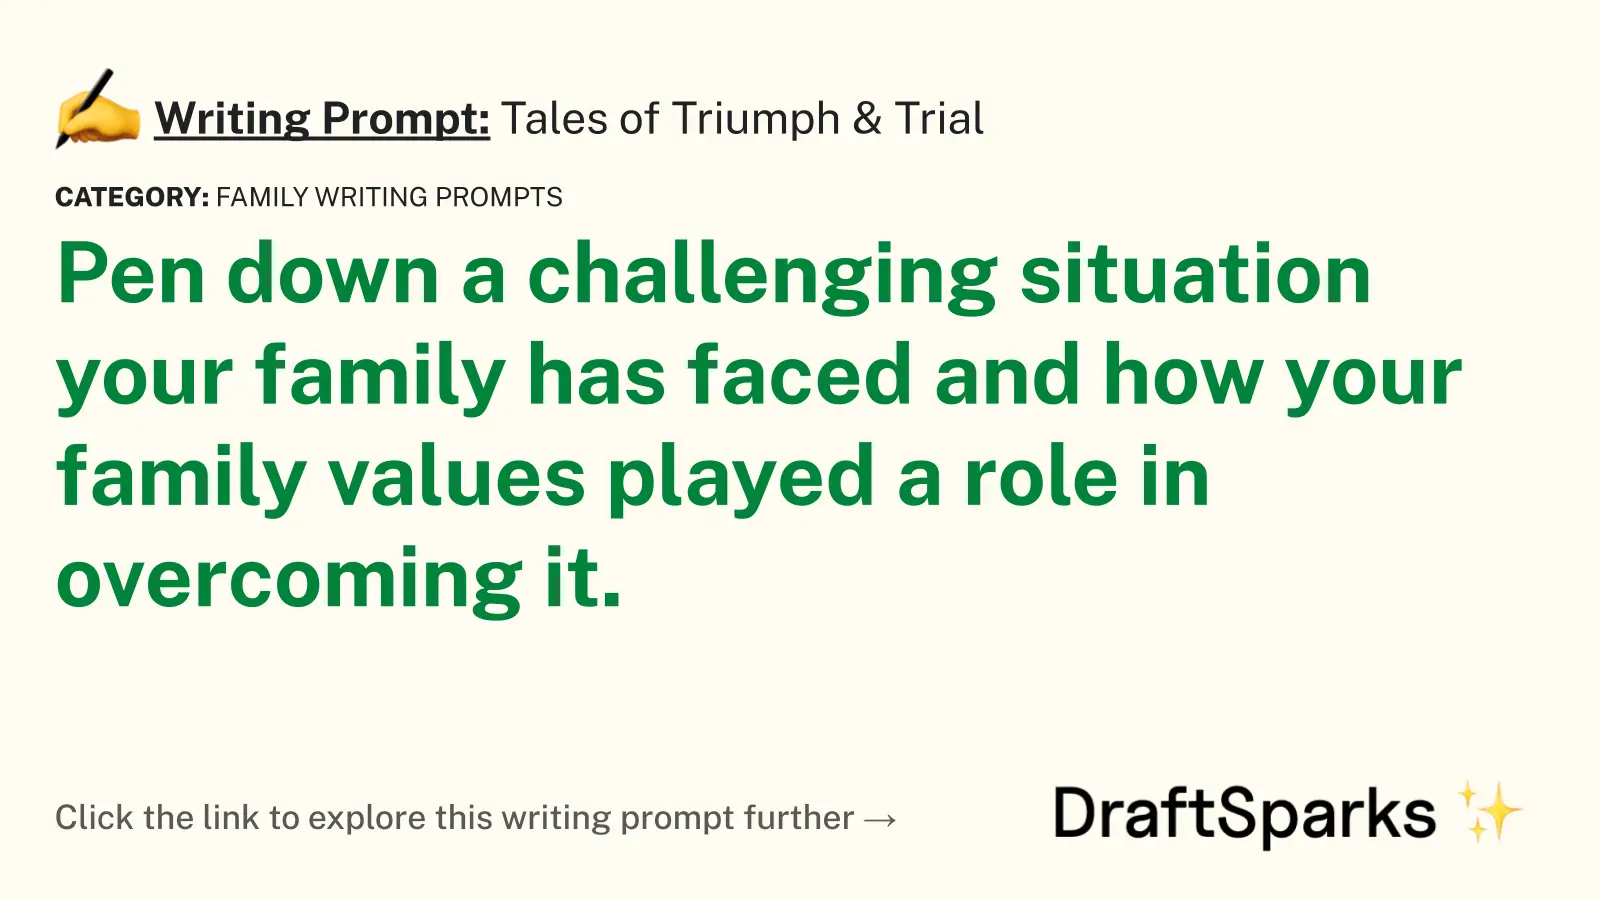 Tales of Triumph & Trial